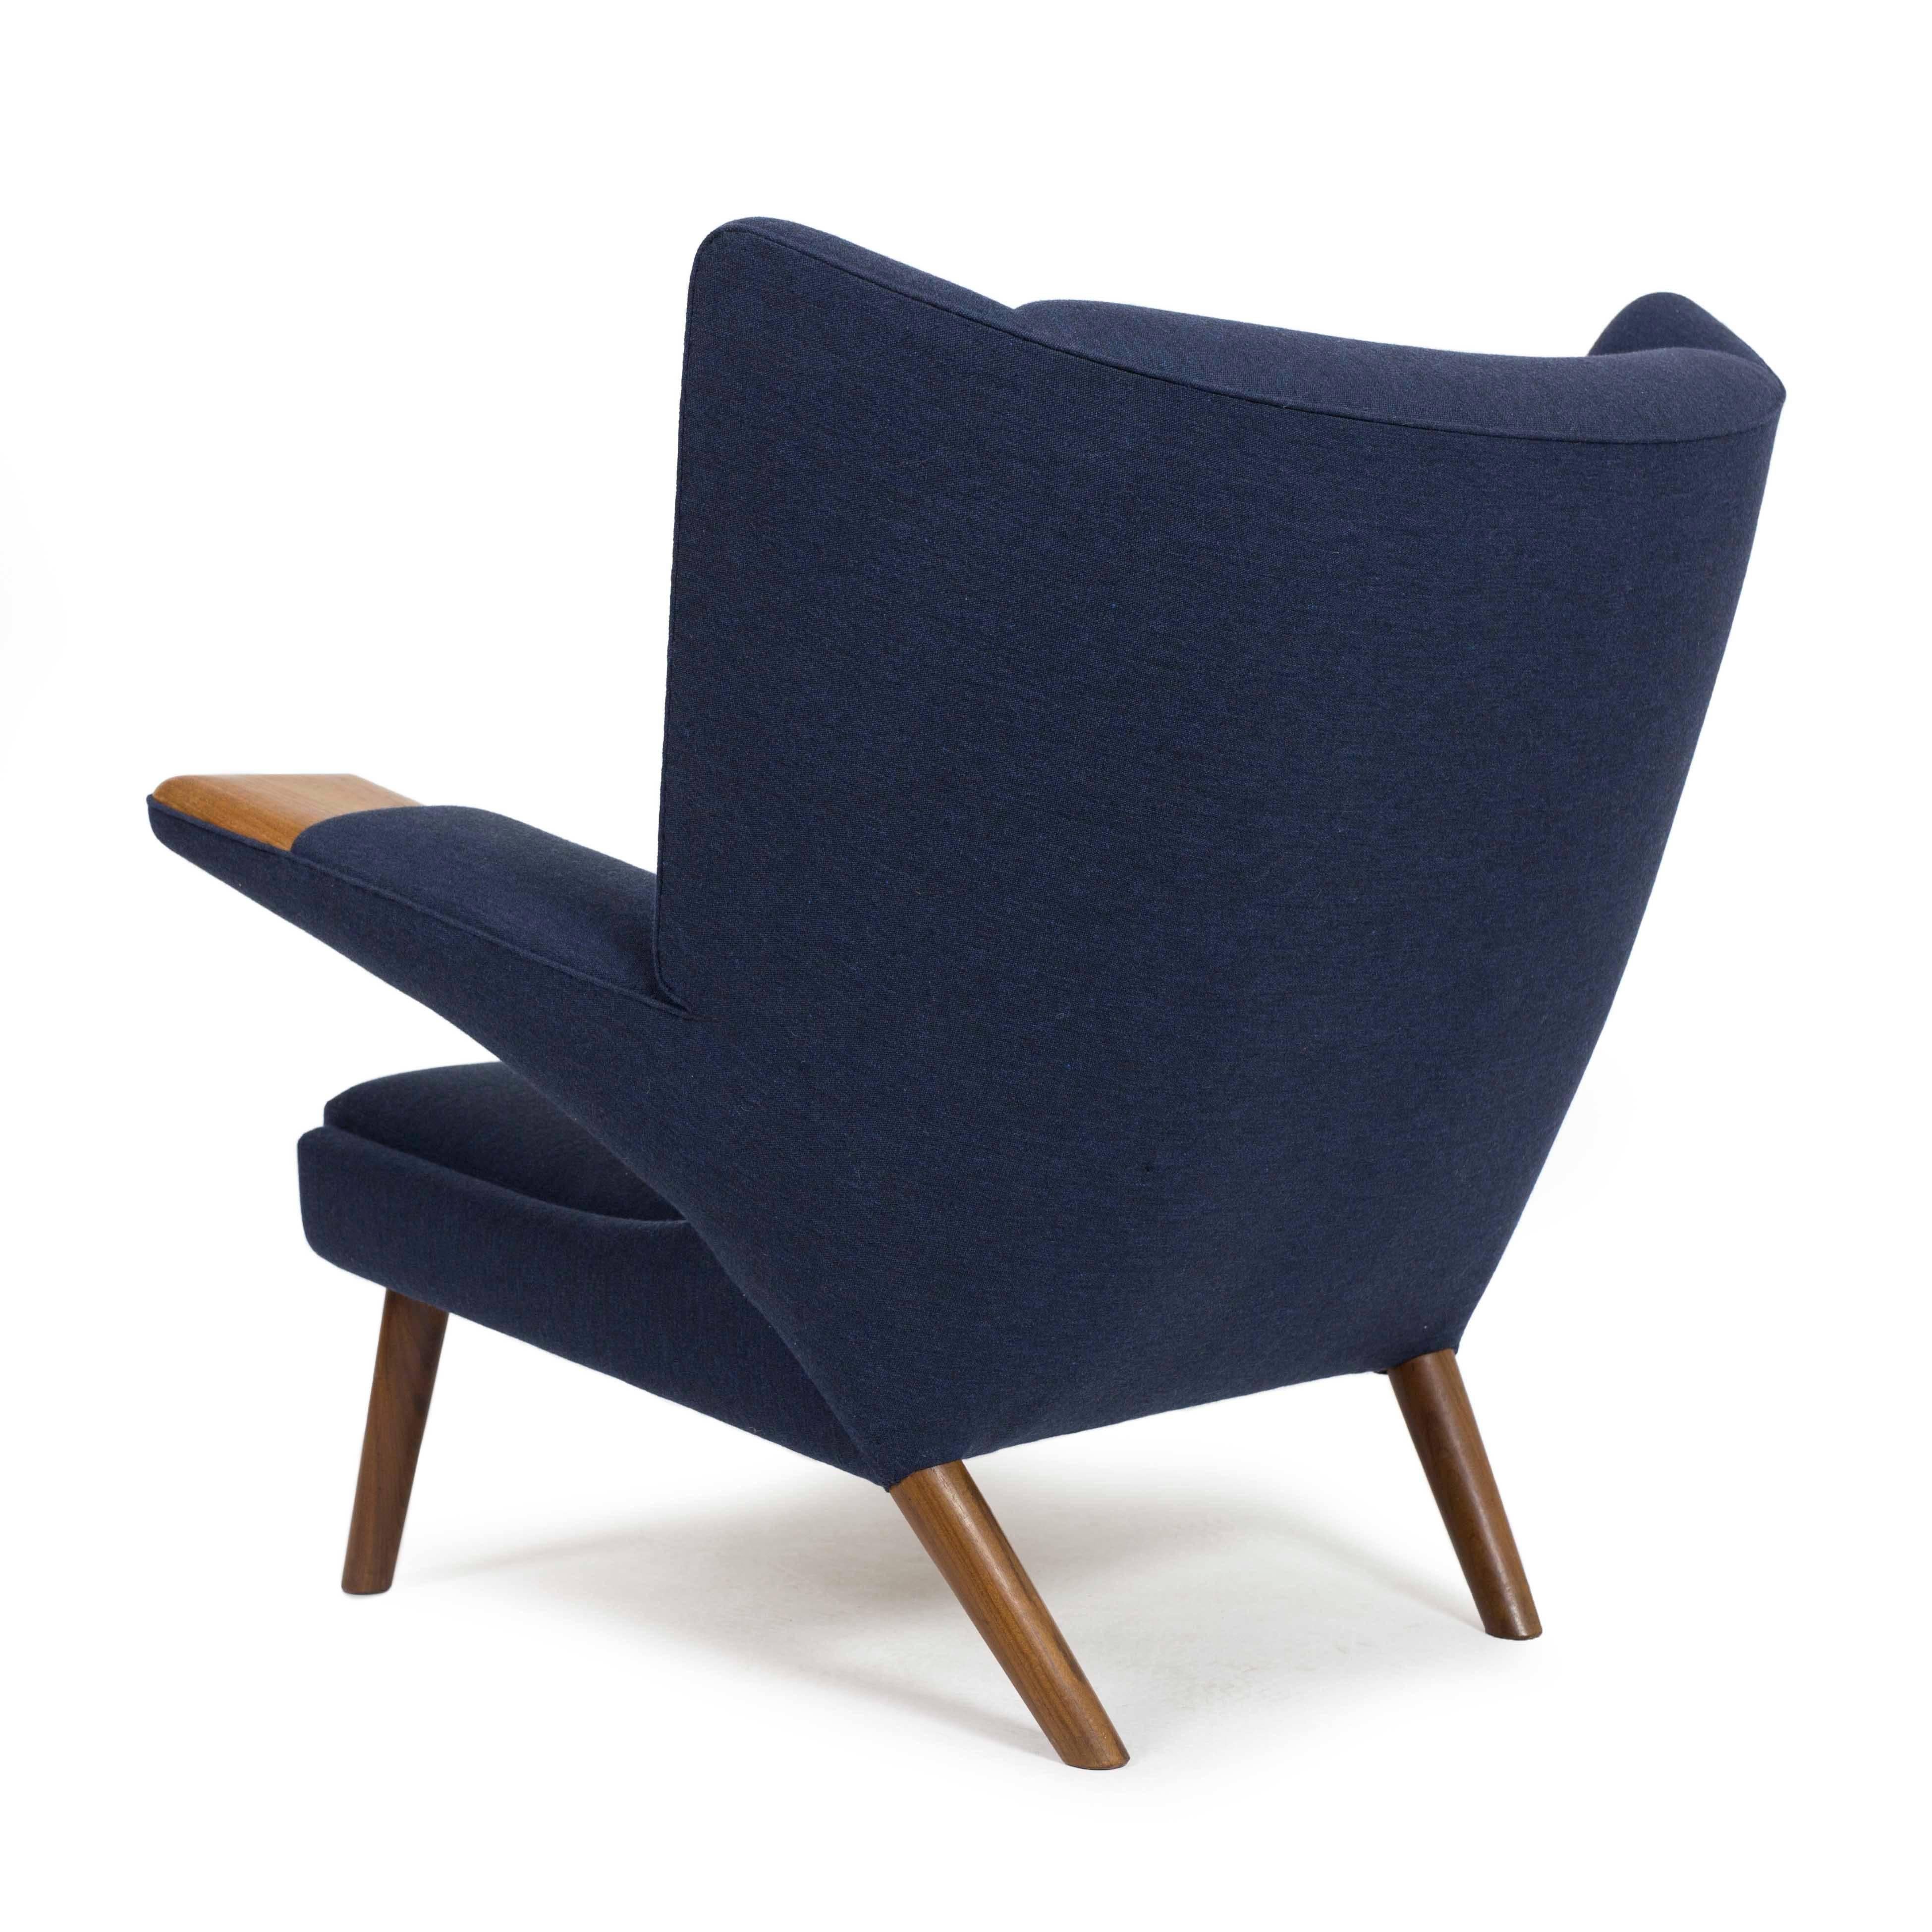 Hans J. Wegner mega bear chair with legs and exposed arms of teak. 
Blue fabric upholstery.
Designed by Hans J. Wegner, 1968, executed by AP Stolen, Denmark.

  